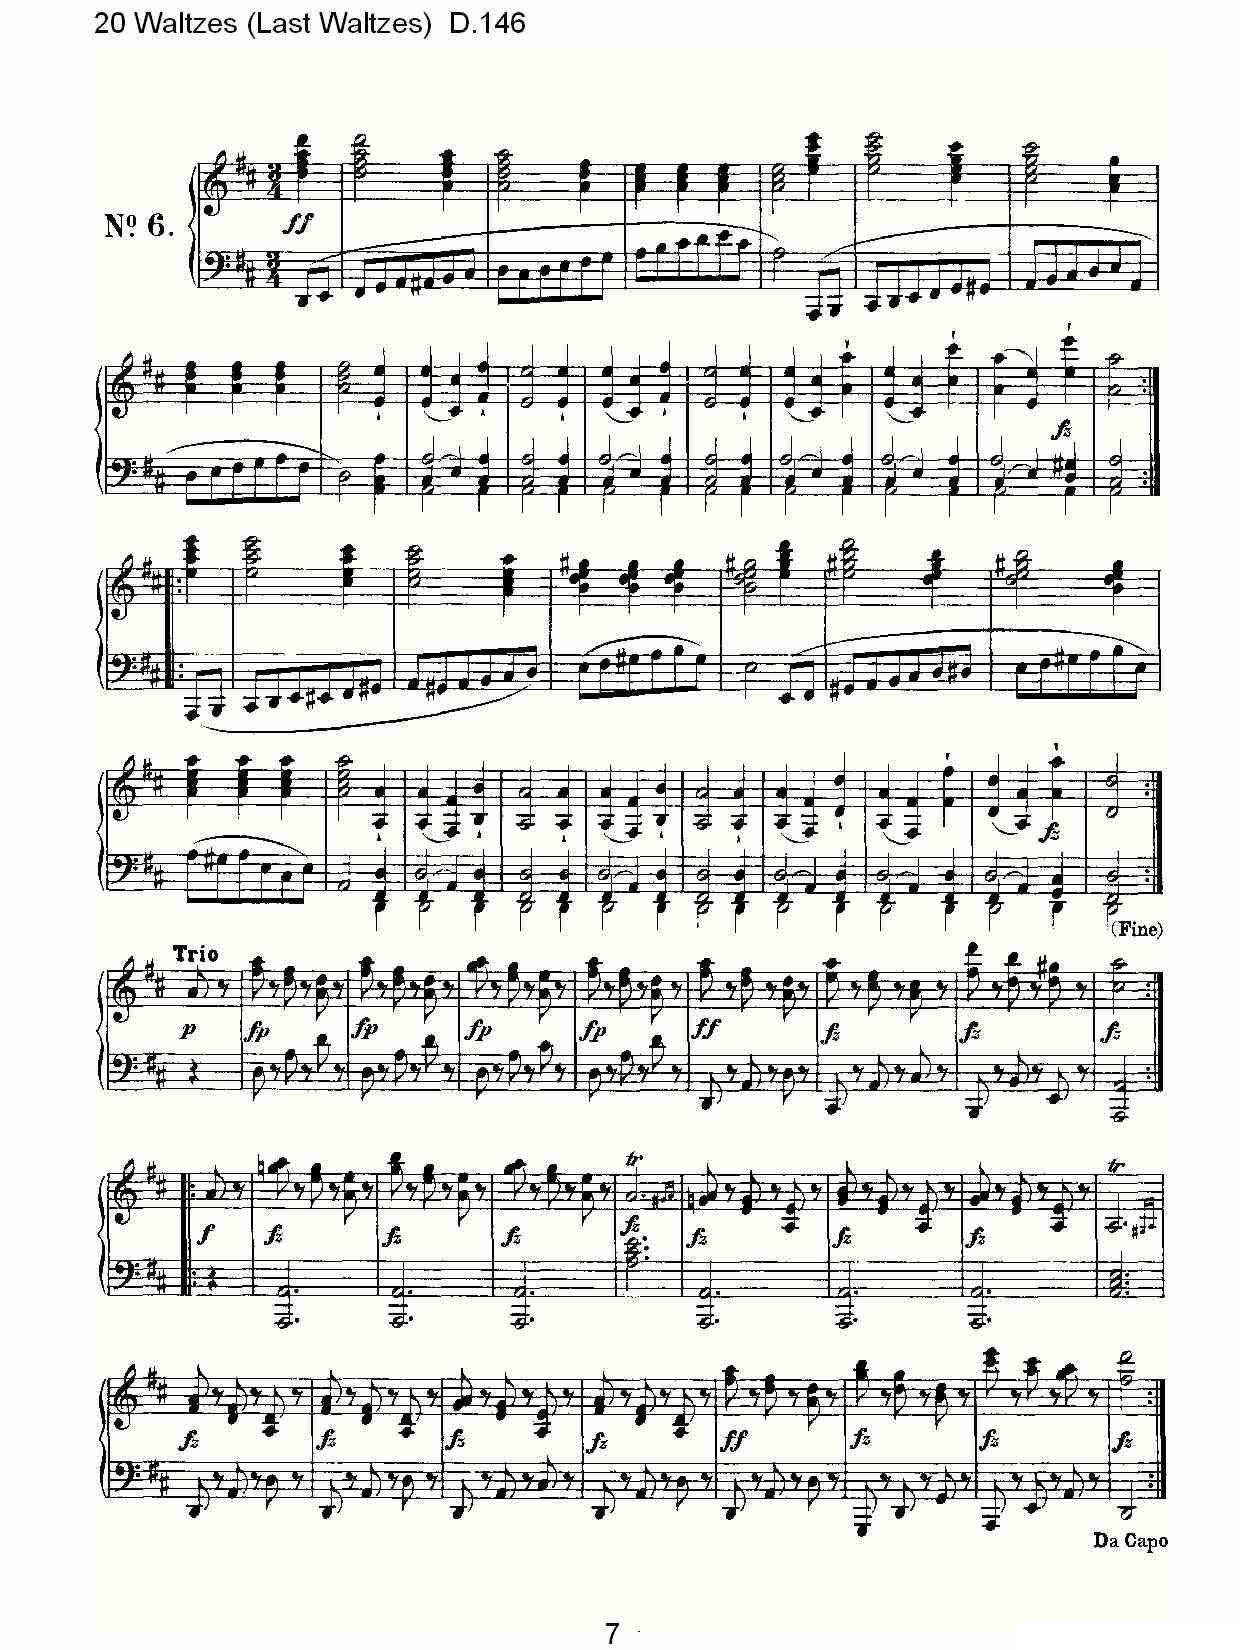 20 Waltzes（Last Waltzes) D.14）钢琴曲谱（图7）